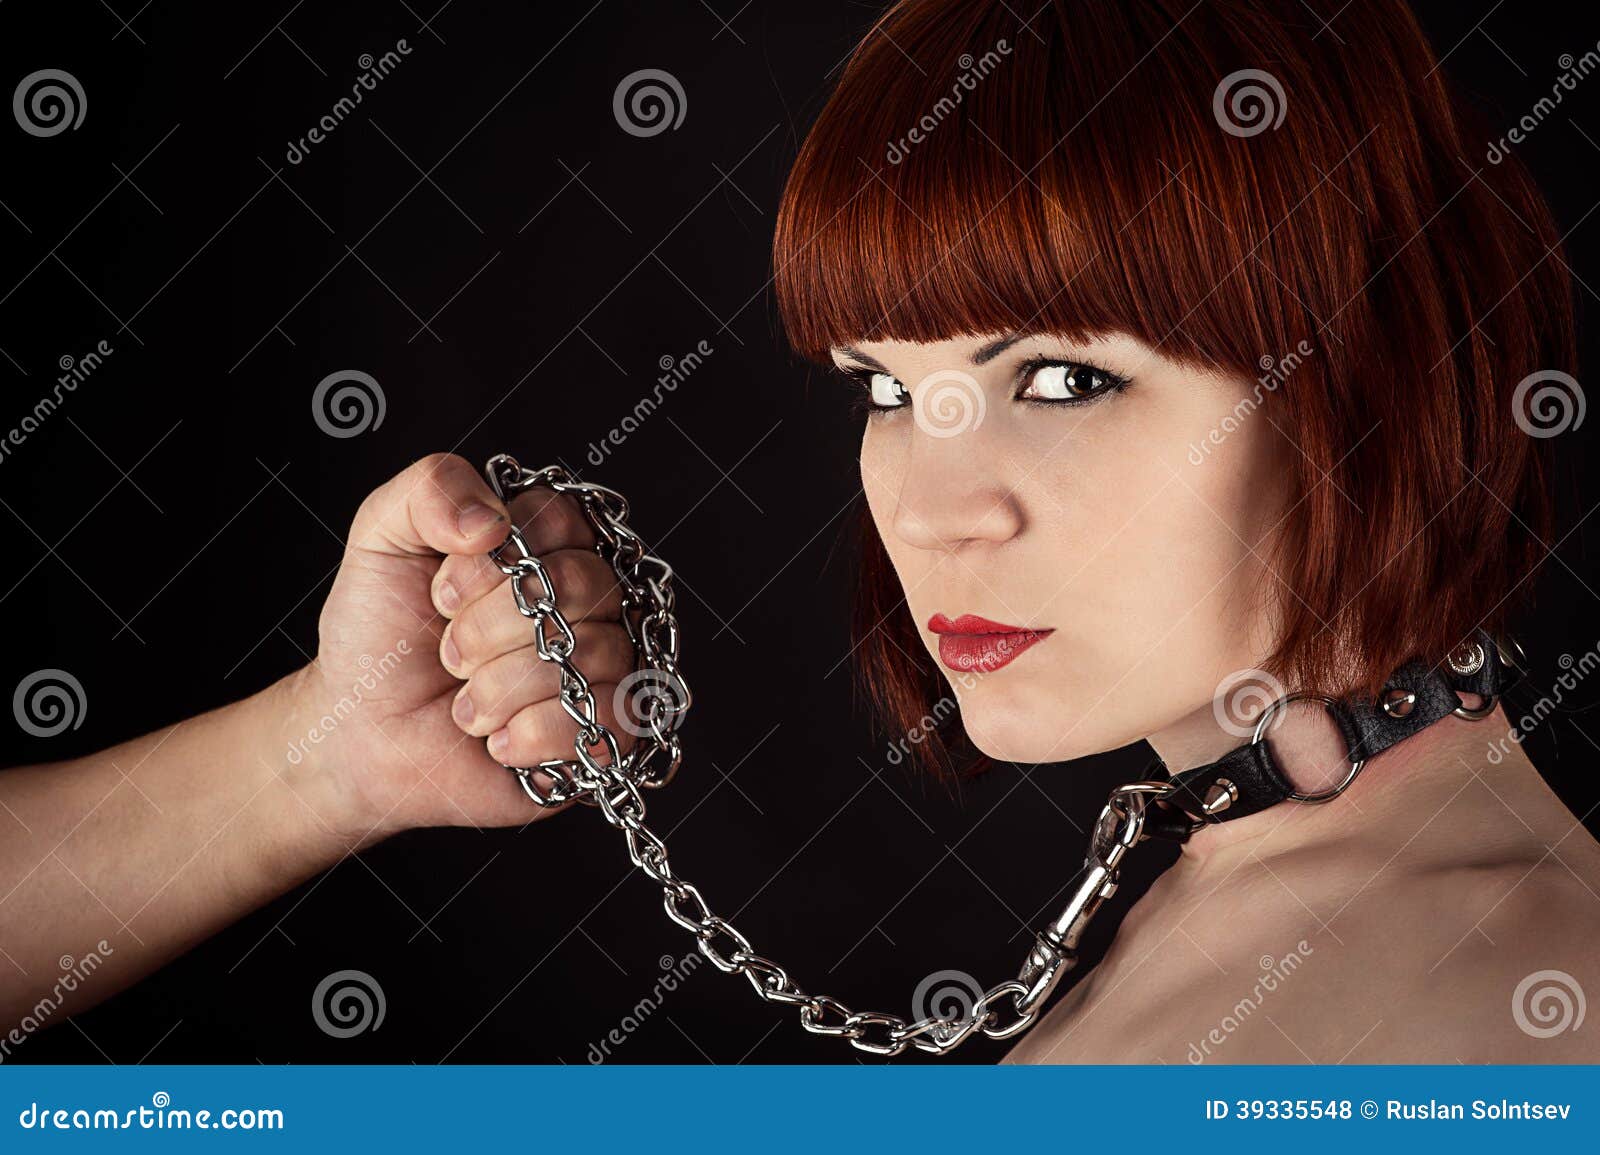 slave girl on leash